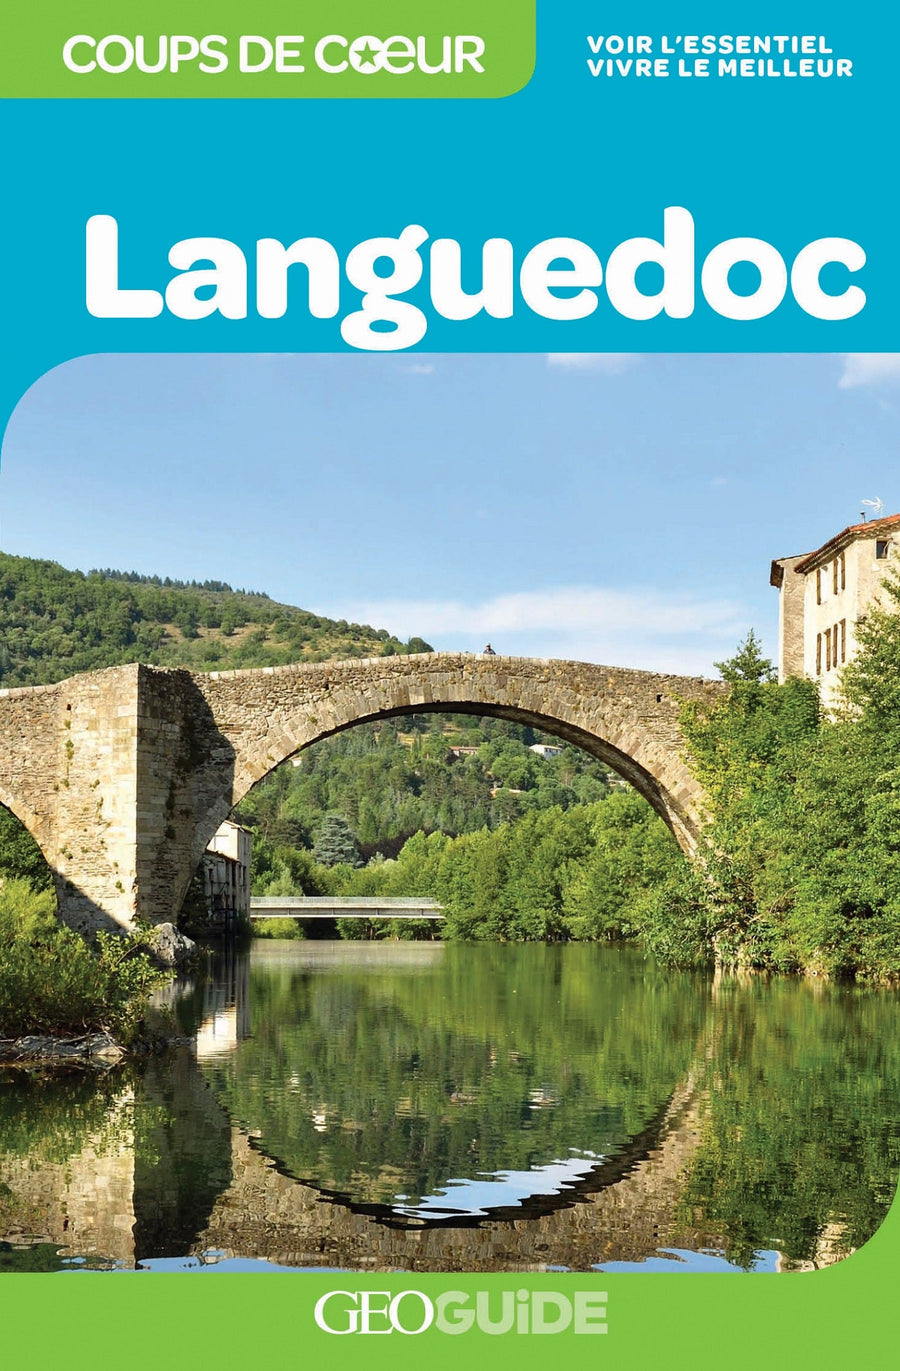 Géoguide (coups de coeur) - Languedoc | Gallimard guide de voyage Gallimard 